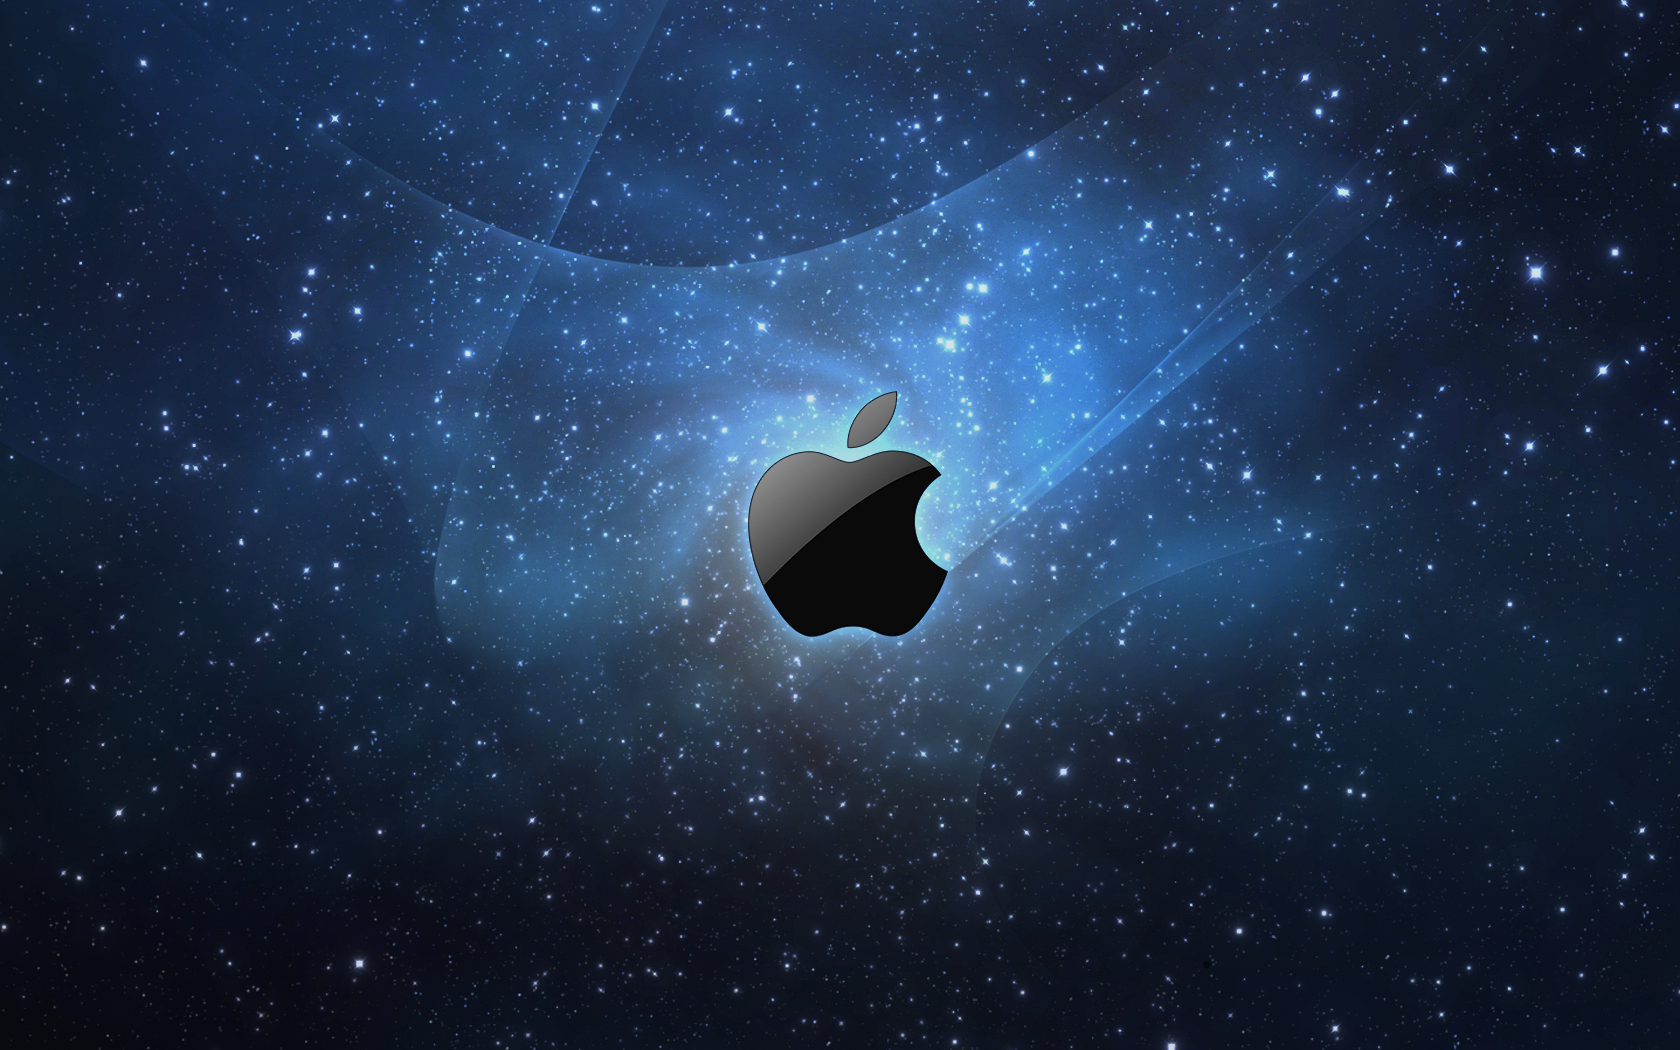 49+] Apple HD Wallpaper Downloads Free - WallpaperSafari